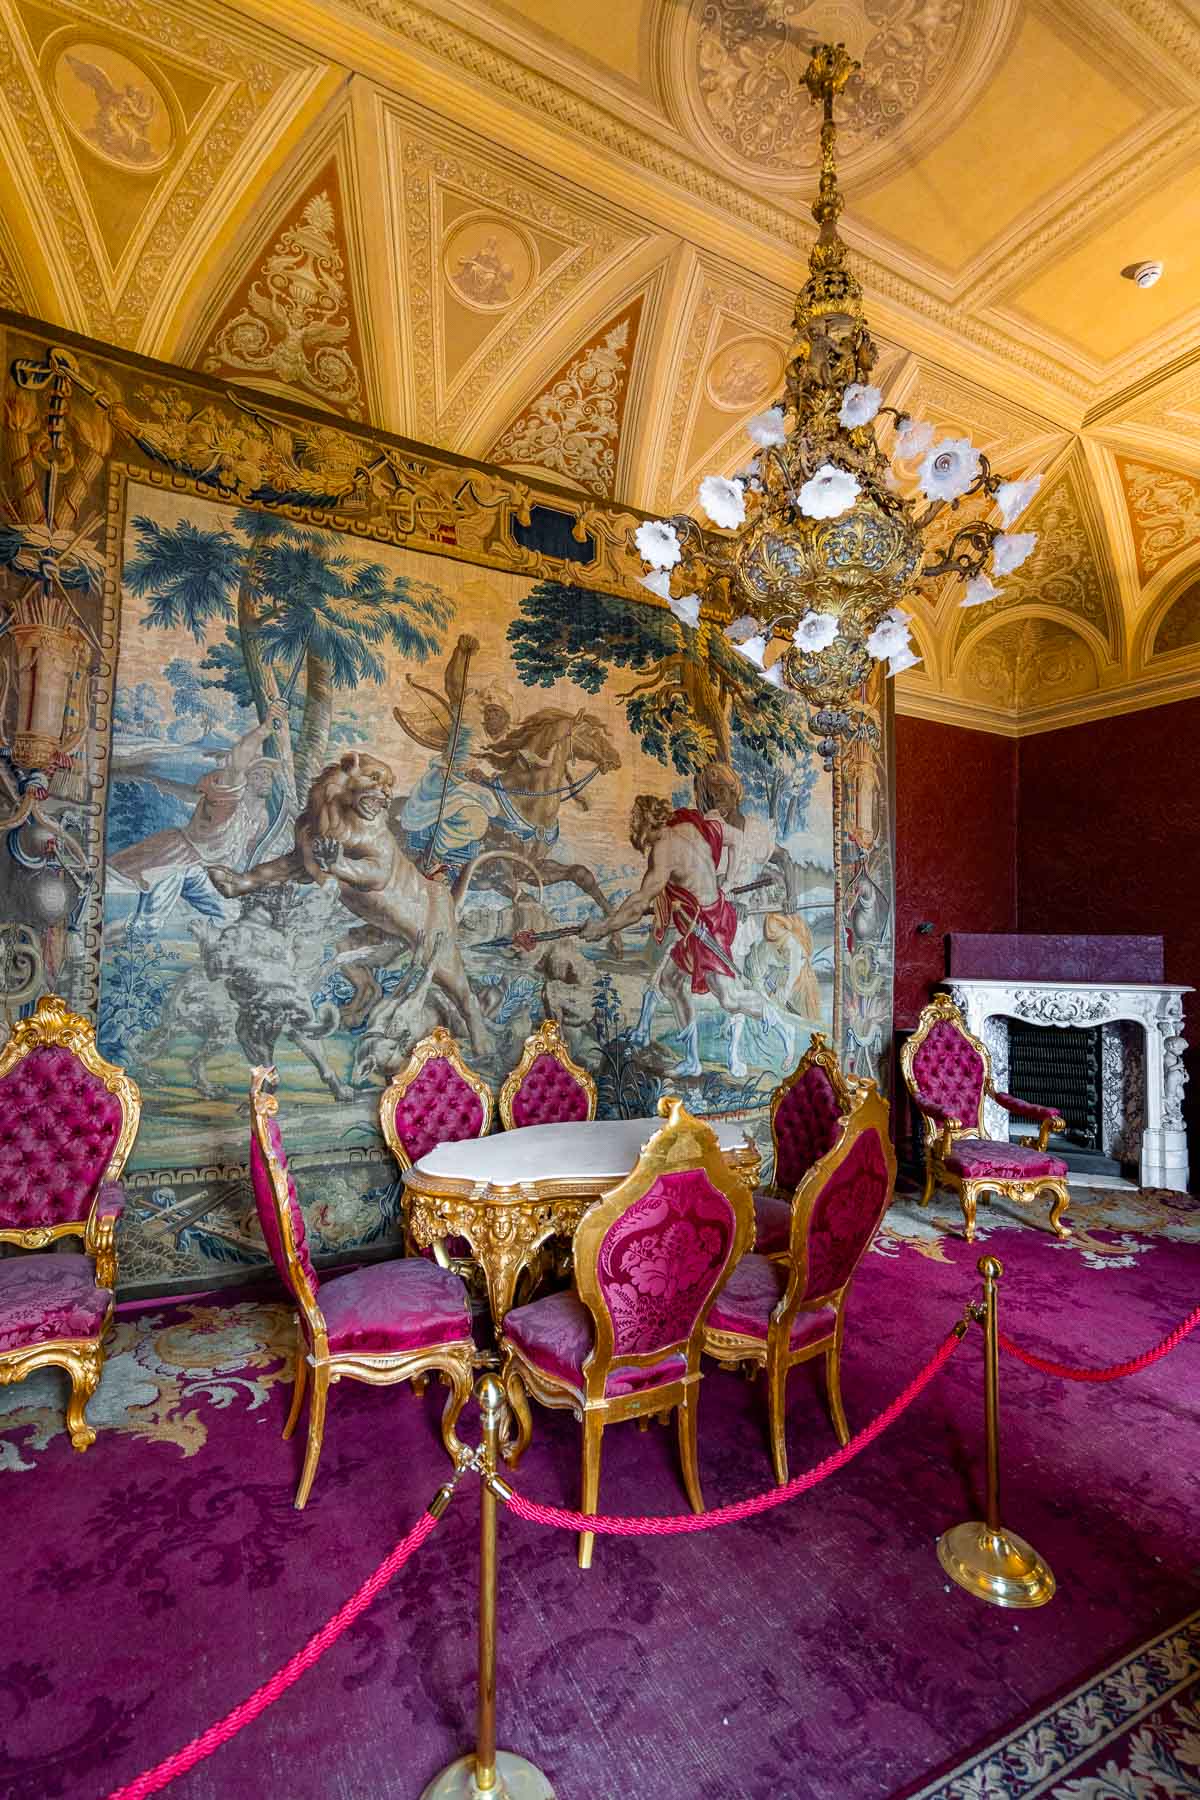 Interior of Villa Monastero in Varenna, Lake Como